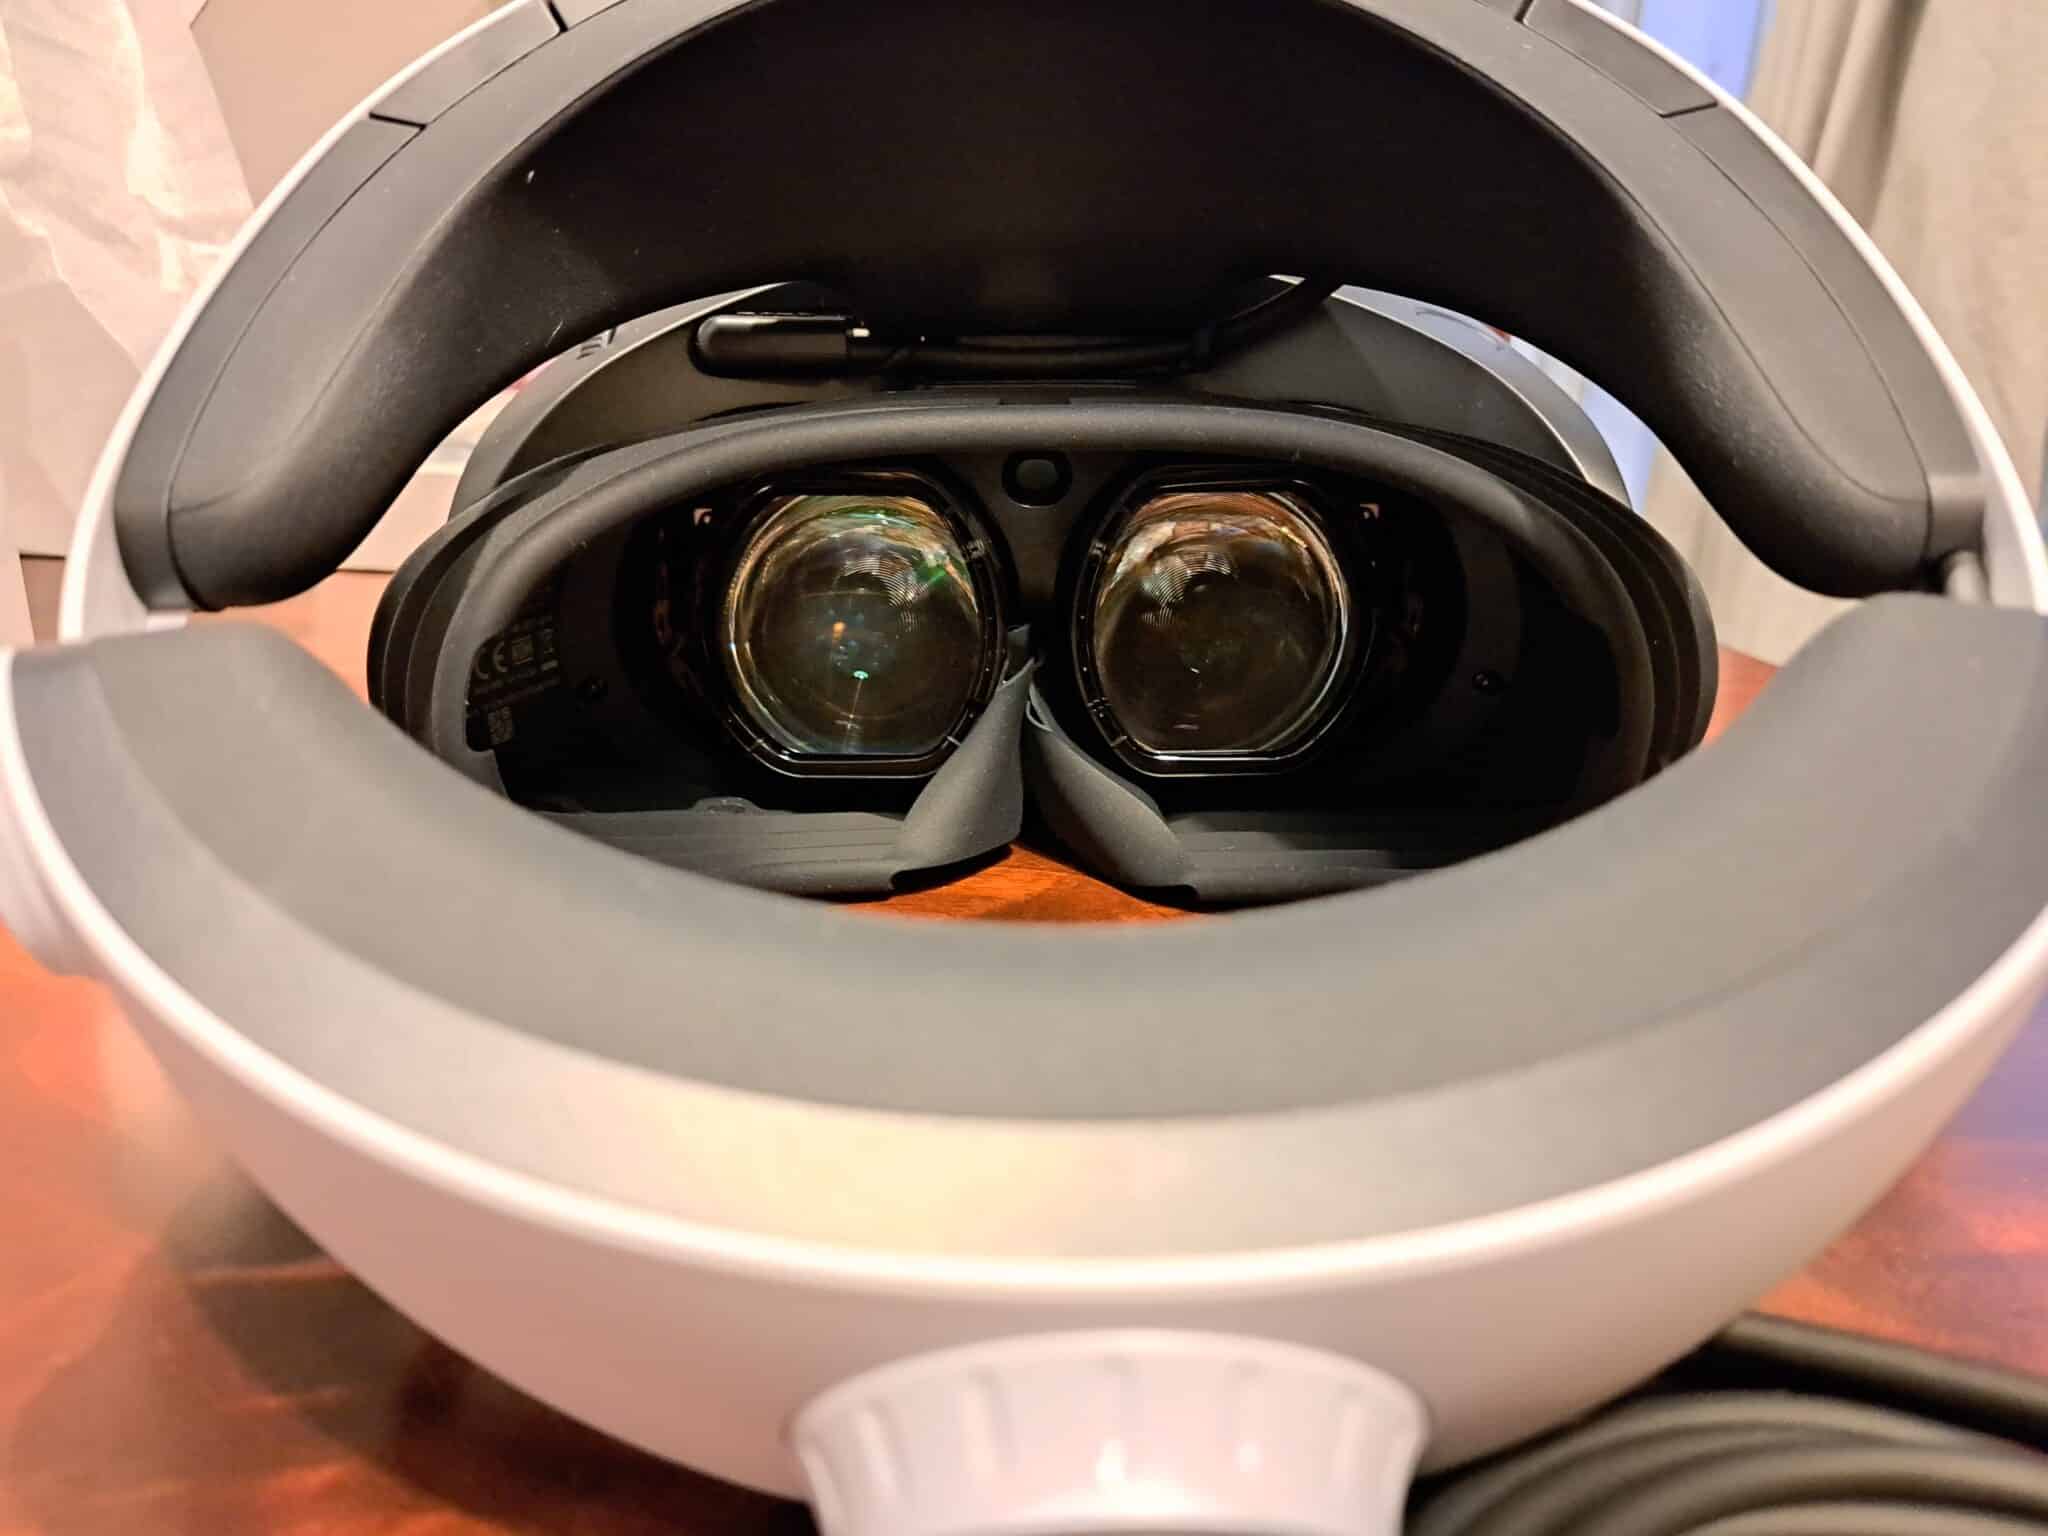 Sony PlayStation VR2 PS5 dedicated PS VR2 virtual reality helmet